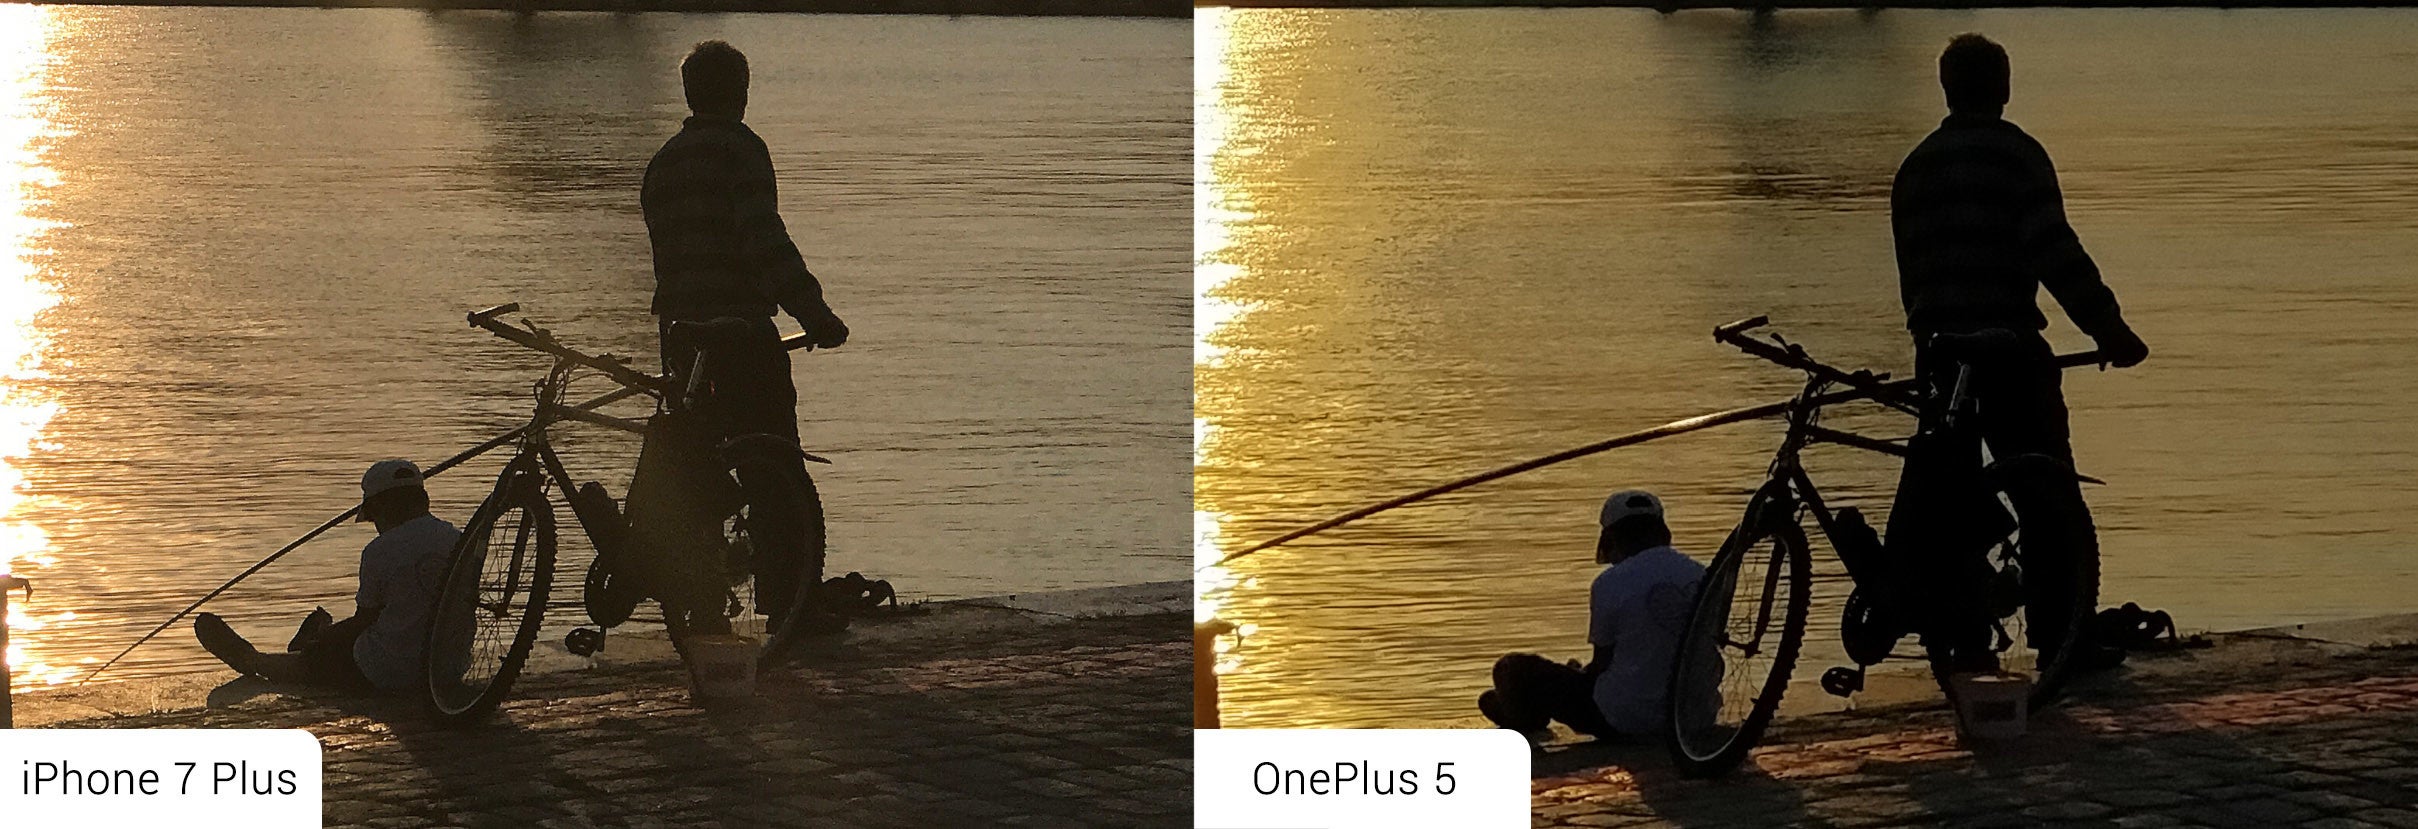 100% crops of photos taken @ 2x zoom - OnePlus 5 vs iPhone 7 Plus: Battle of the telephoto lenses